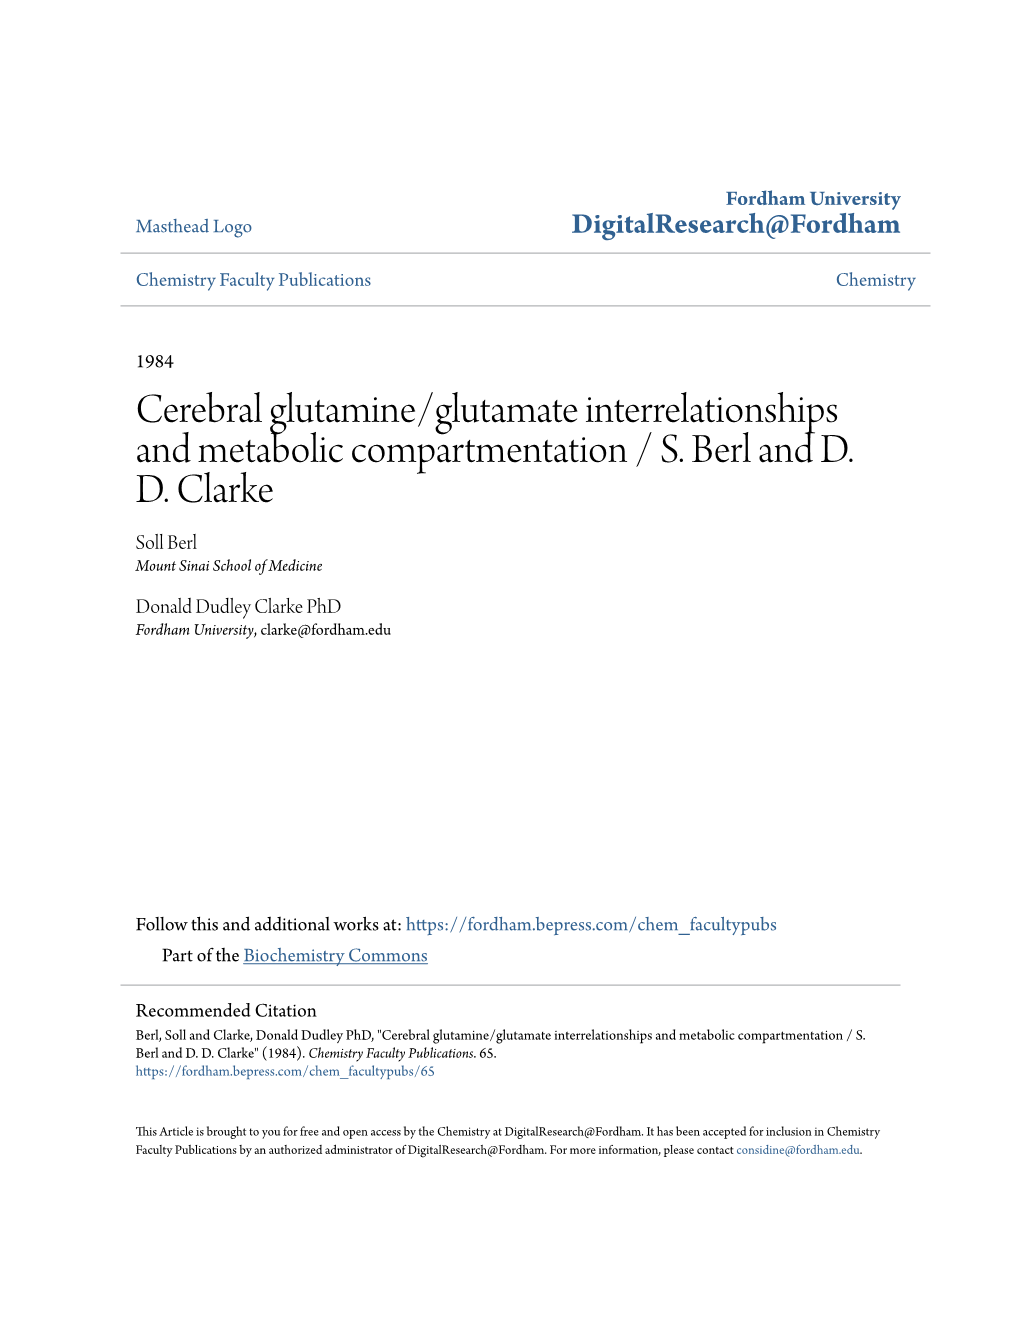 Cerebral Glutamine/Glutamate Interrelationships and Metabolic Compartmentation / S